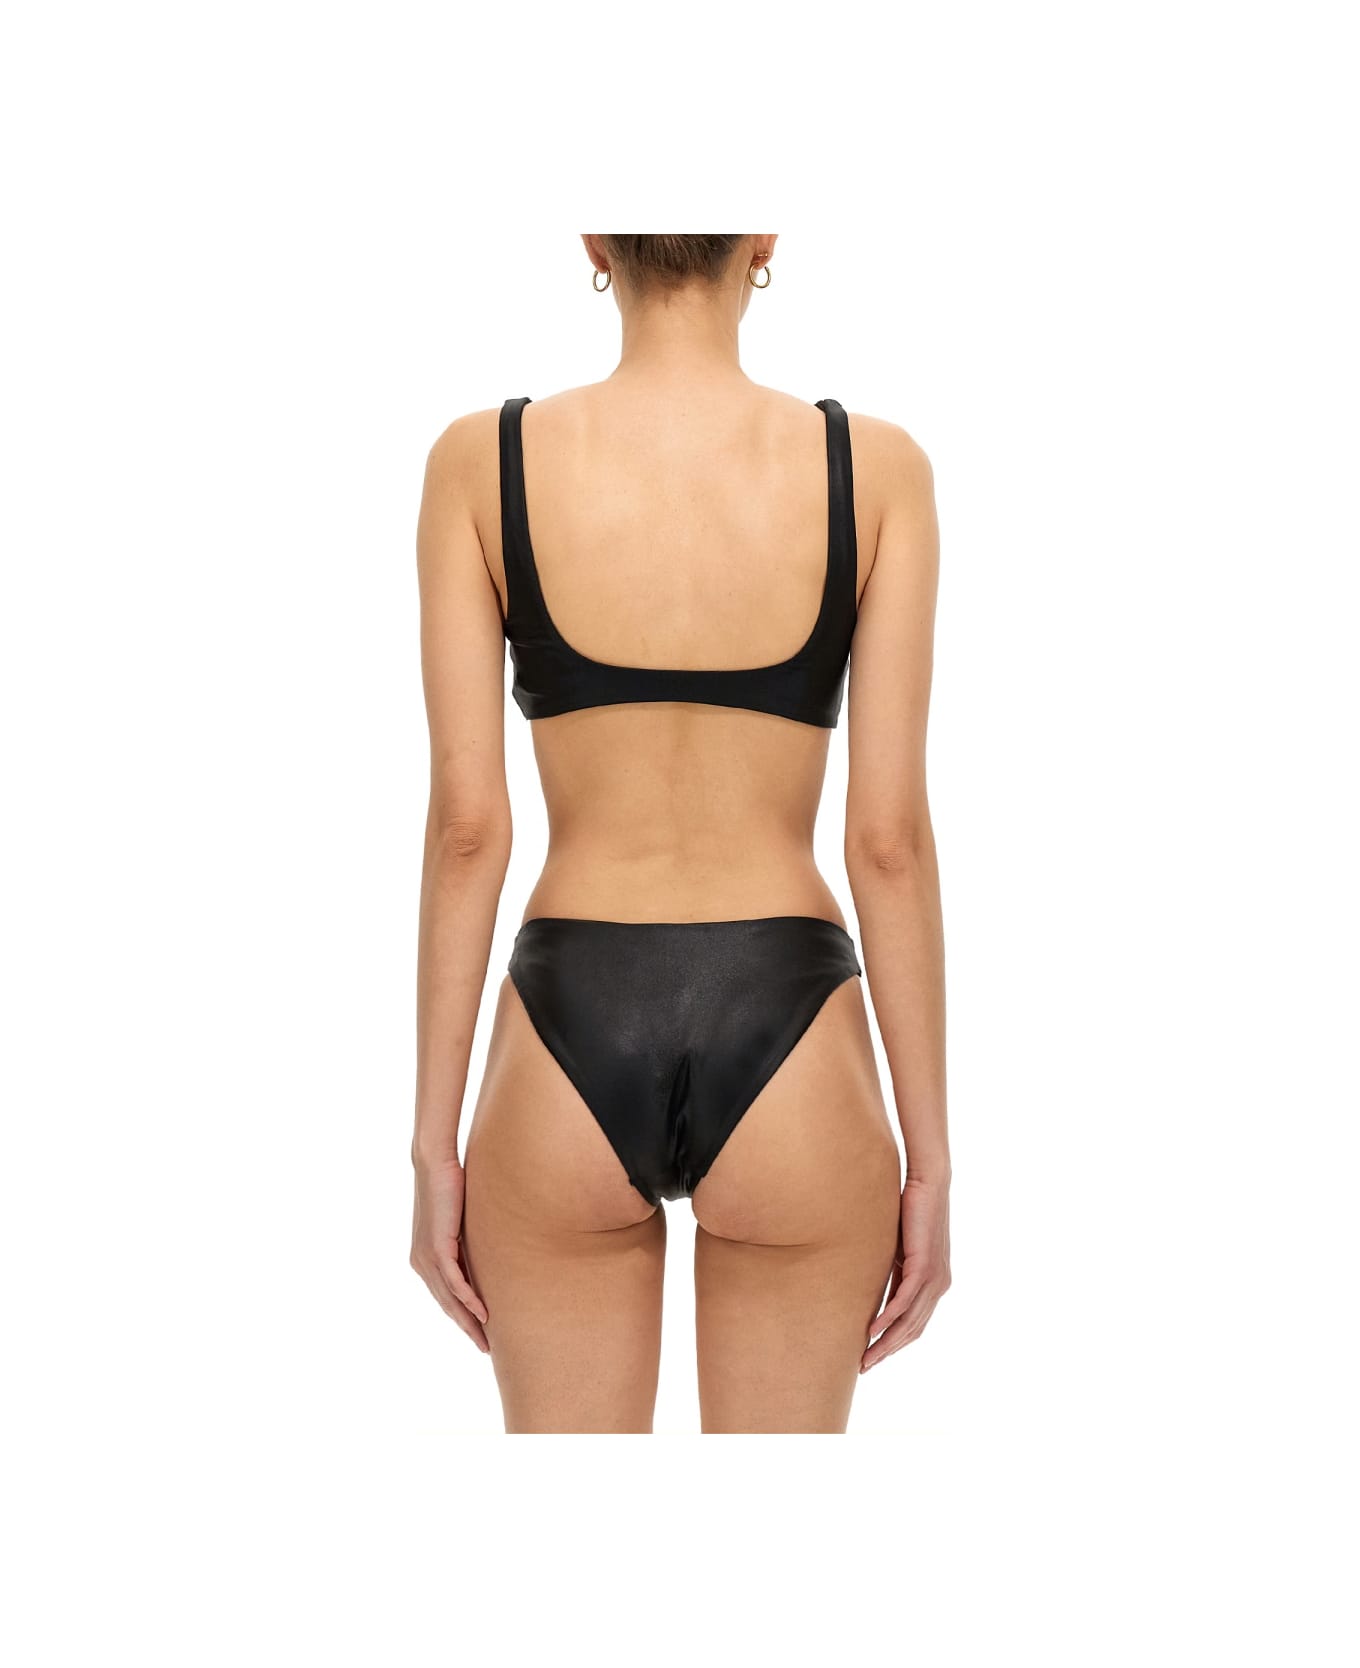 Rotate by Birger Christensen "pearla" Bikini Swimsuit - BLACK